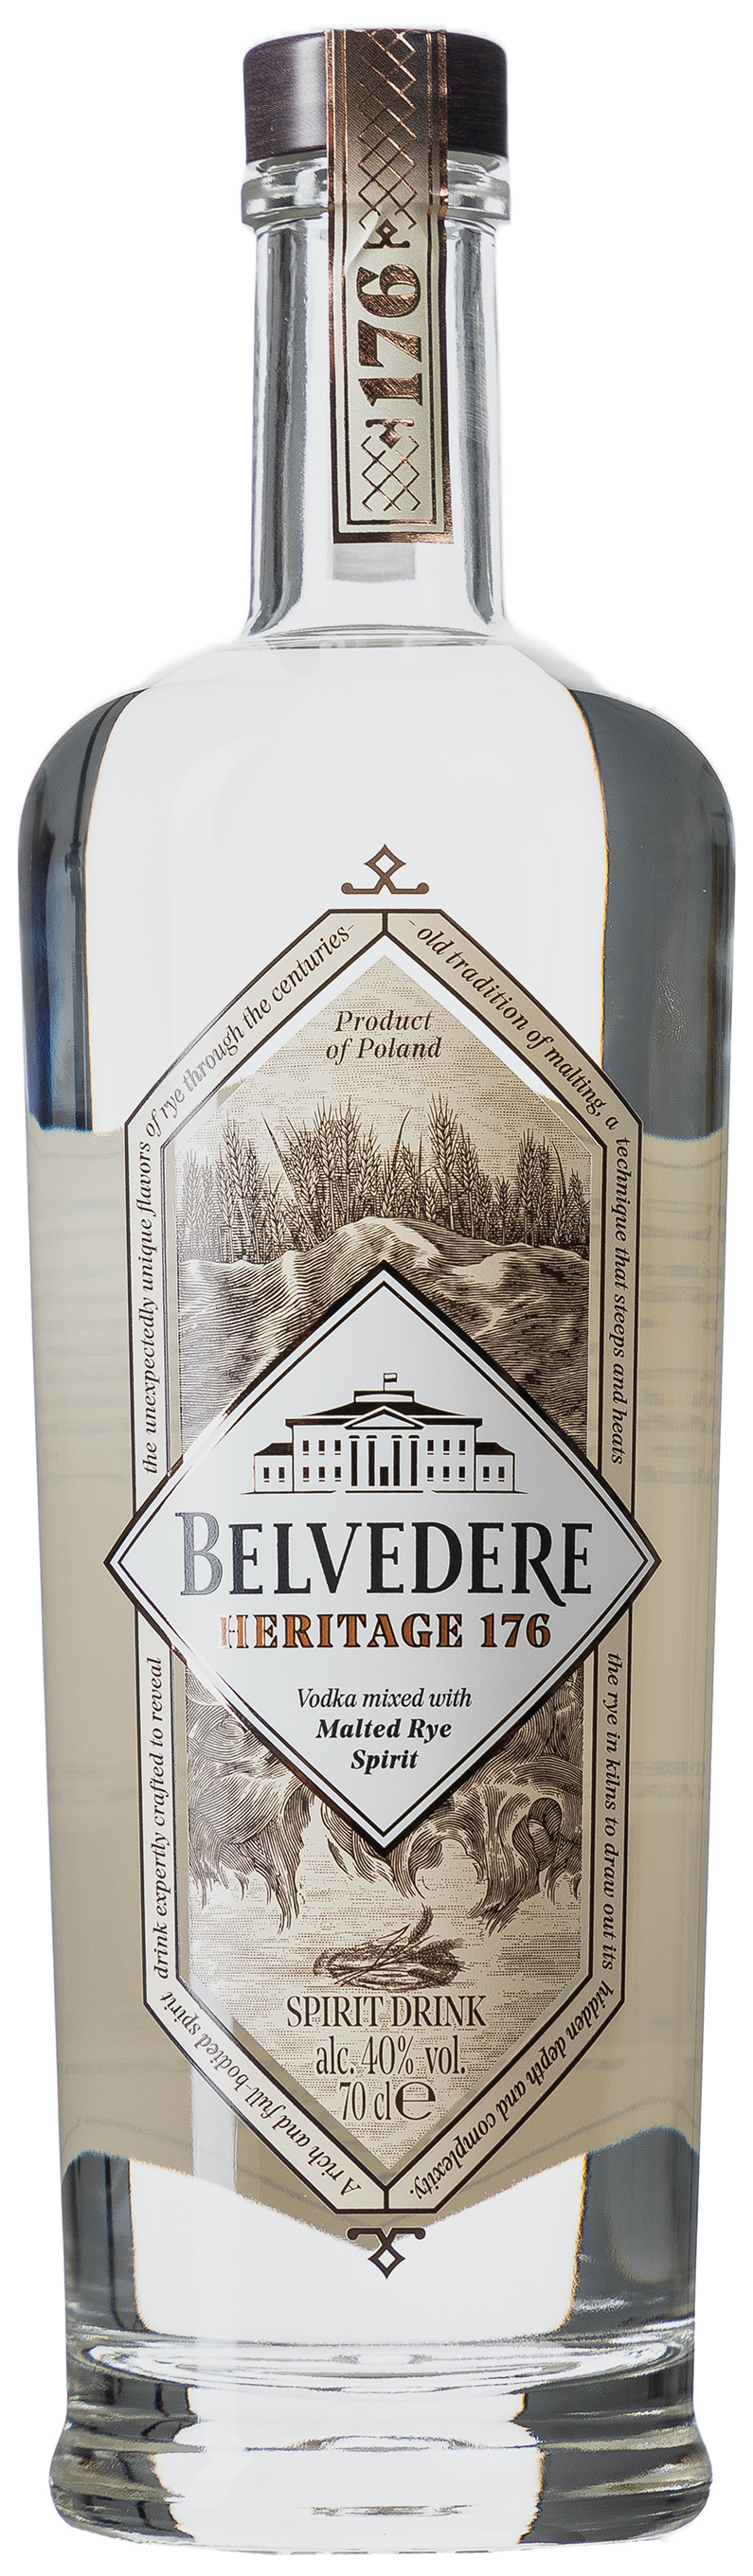 Belvedere Heritage 176 Vodka 40% vol. 0,7L